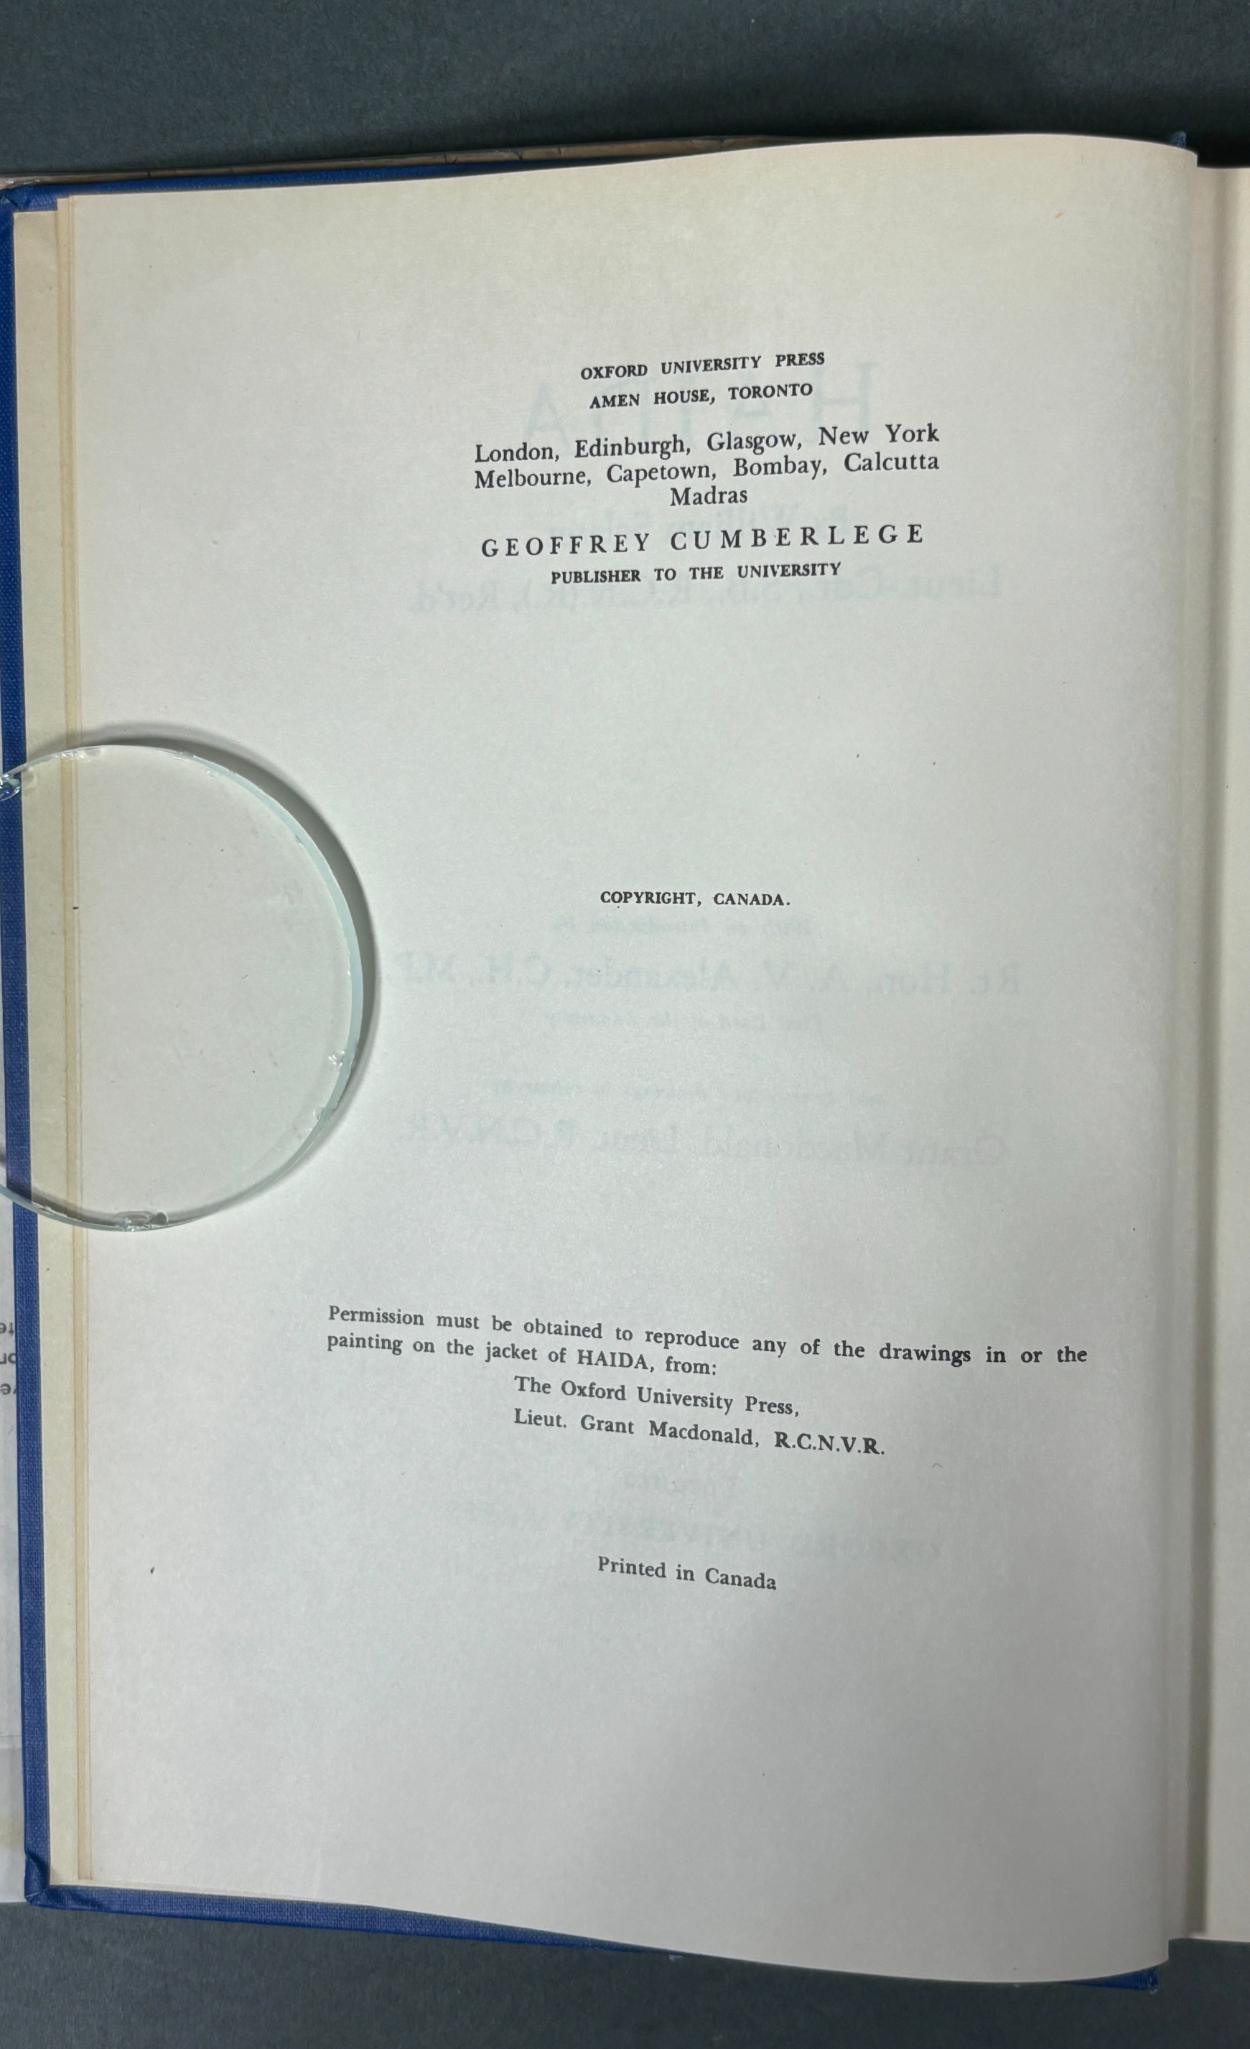 WWII ROYAL CANADIAN NAVY RATINGS CAP HCMS HAIDA & 1ST EDITION BOOK "HAIDA" PUBLISHED 1946